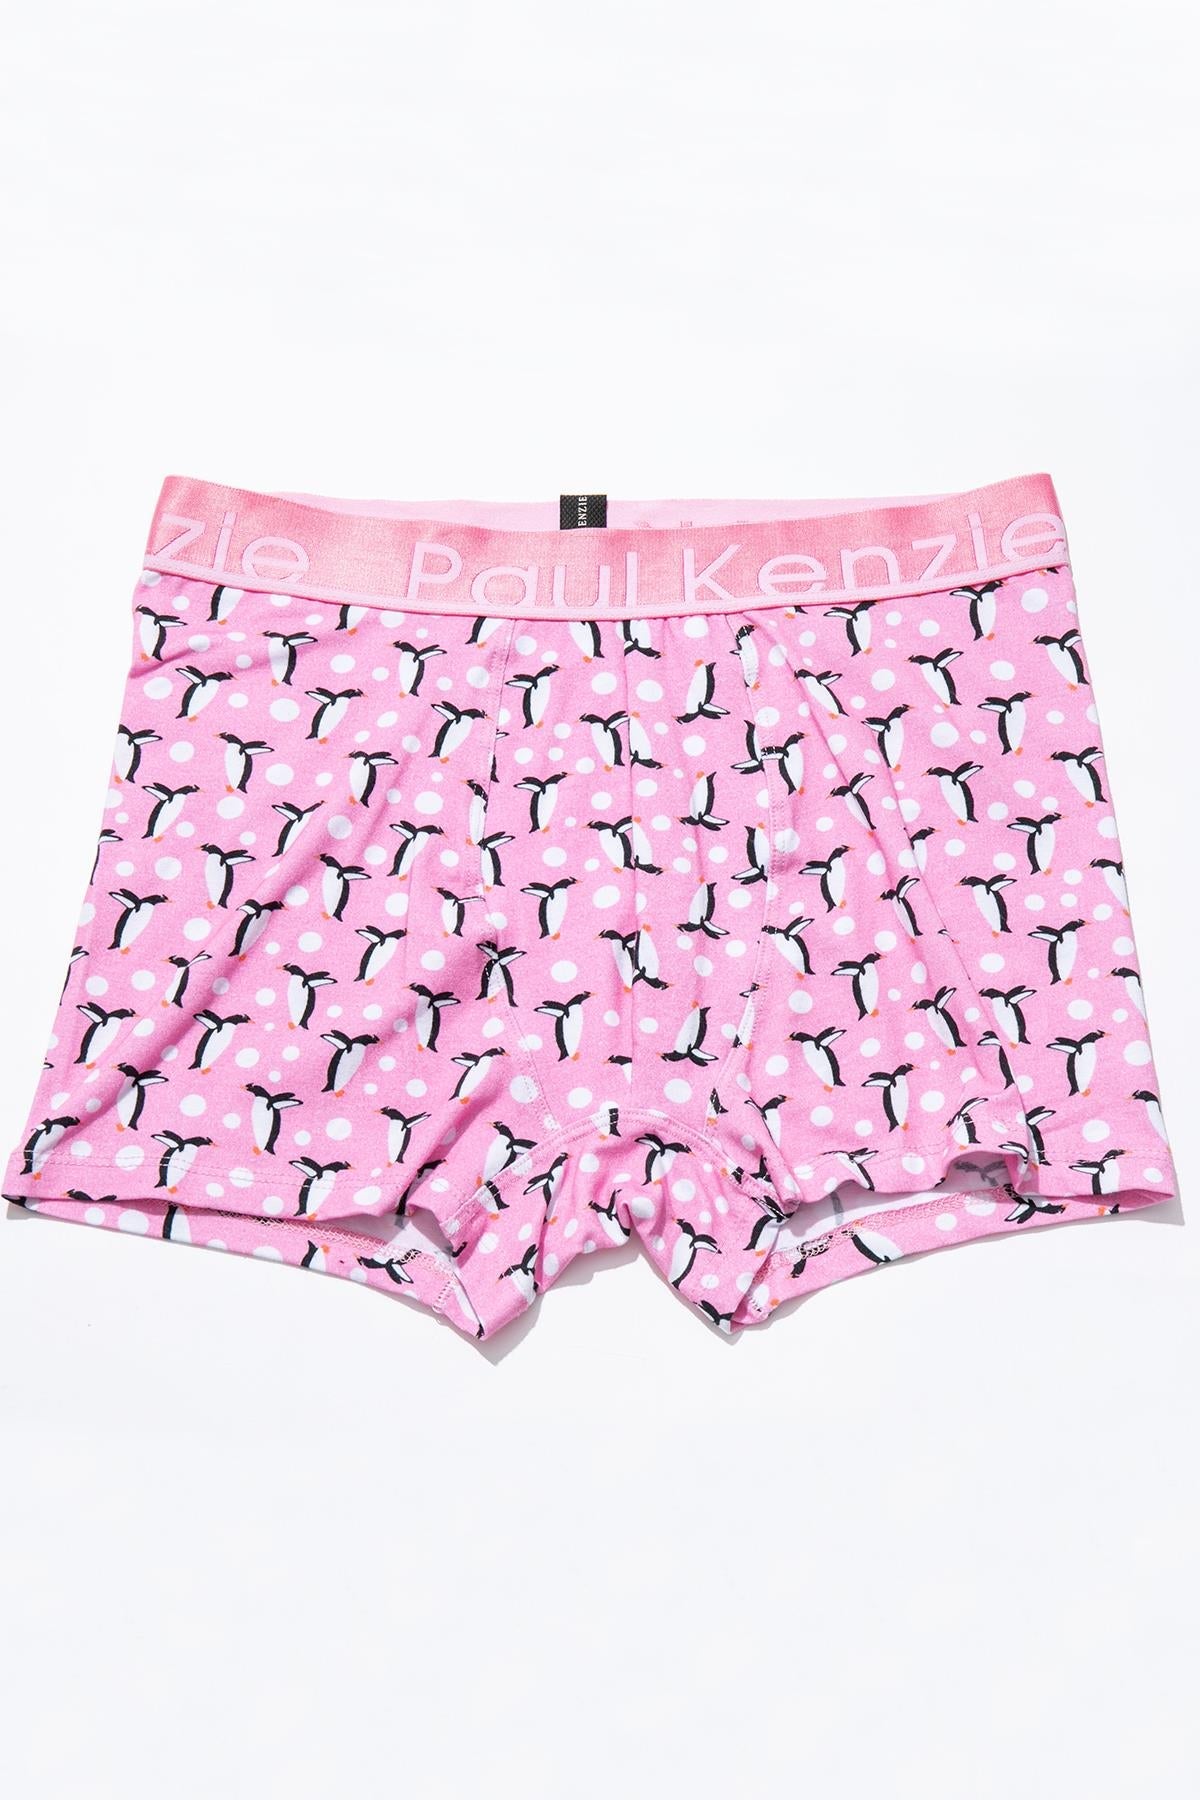 XS Powder Pink Boxer Shorts - 30 Waist Sleek Fit